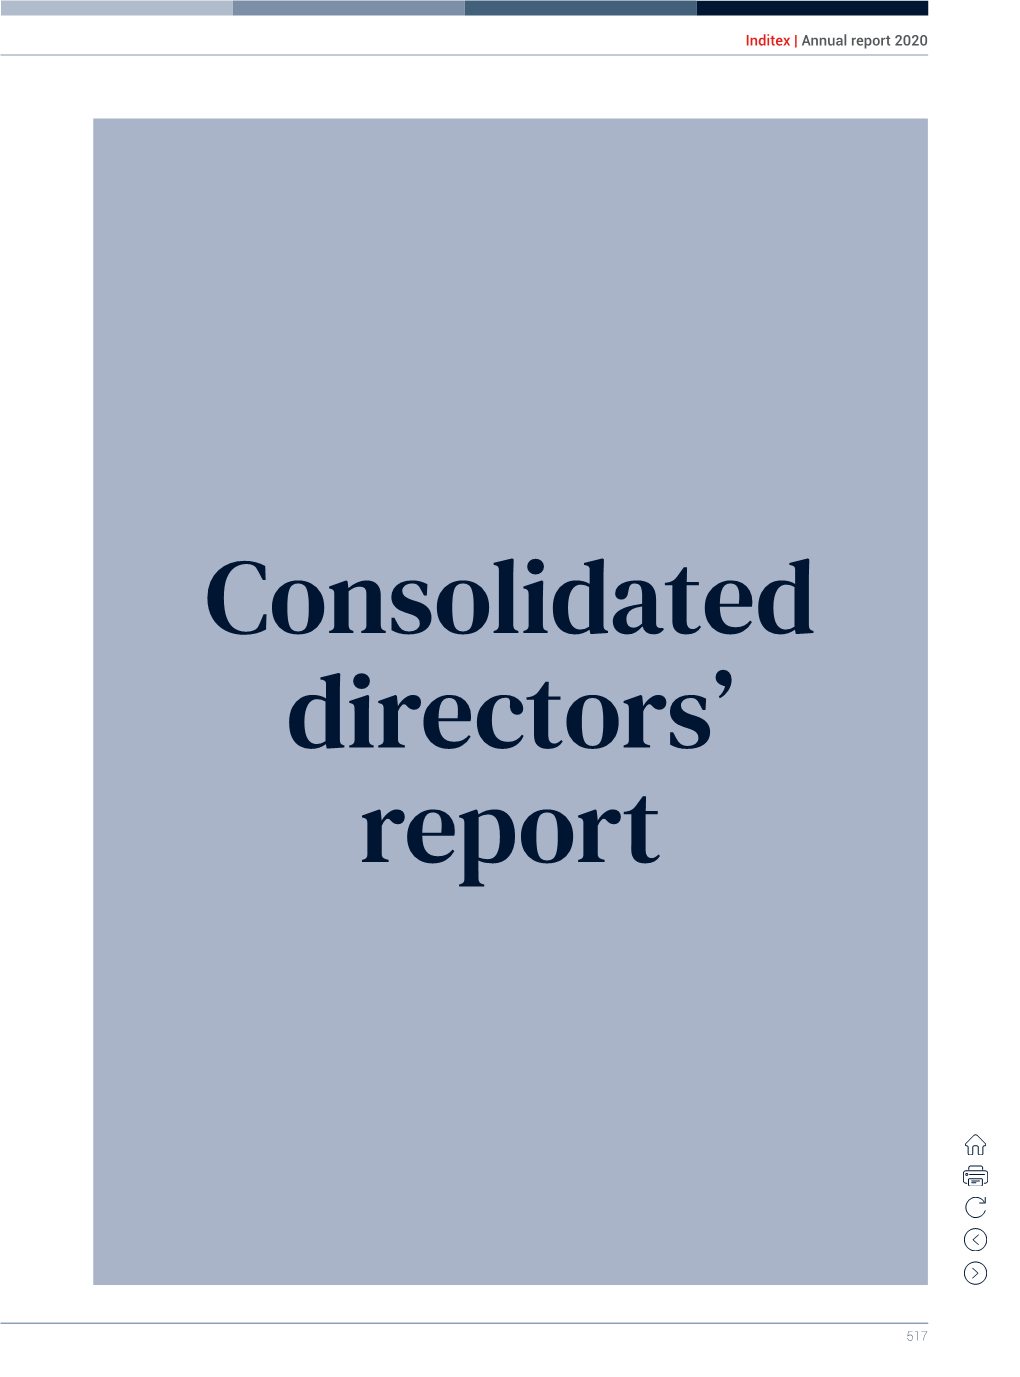 Consolidated Directors' Report